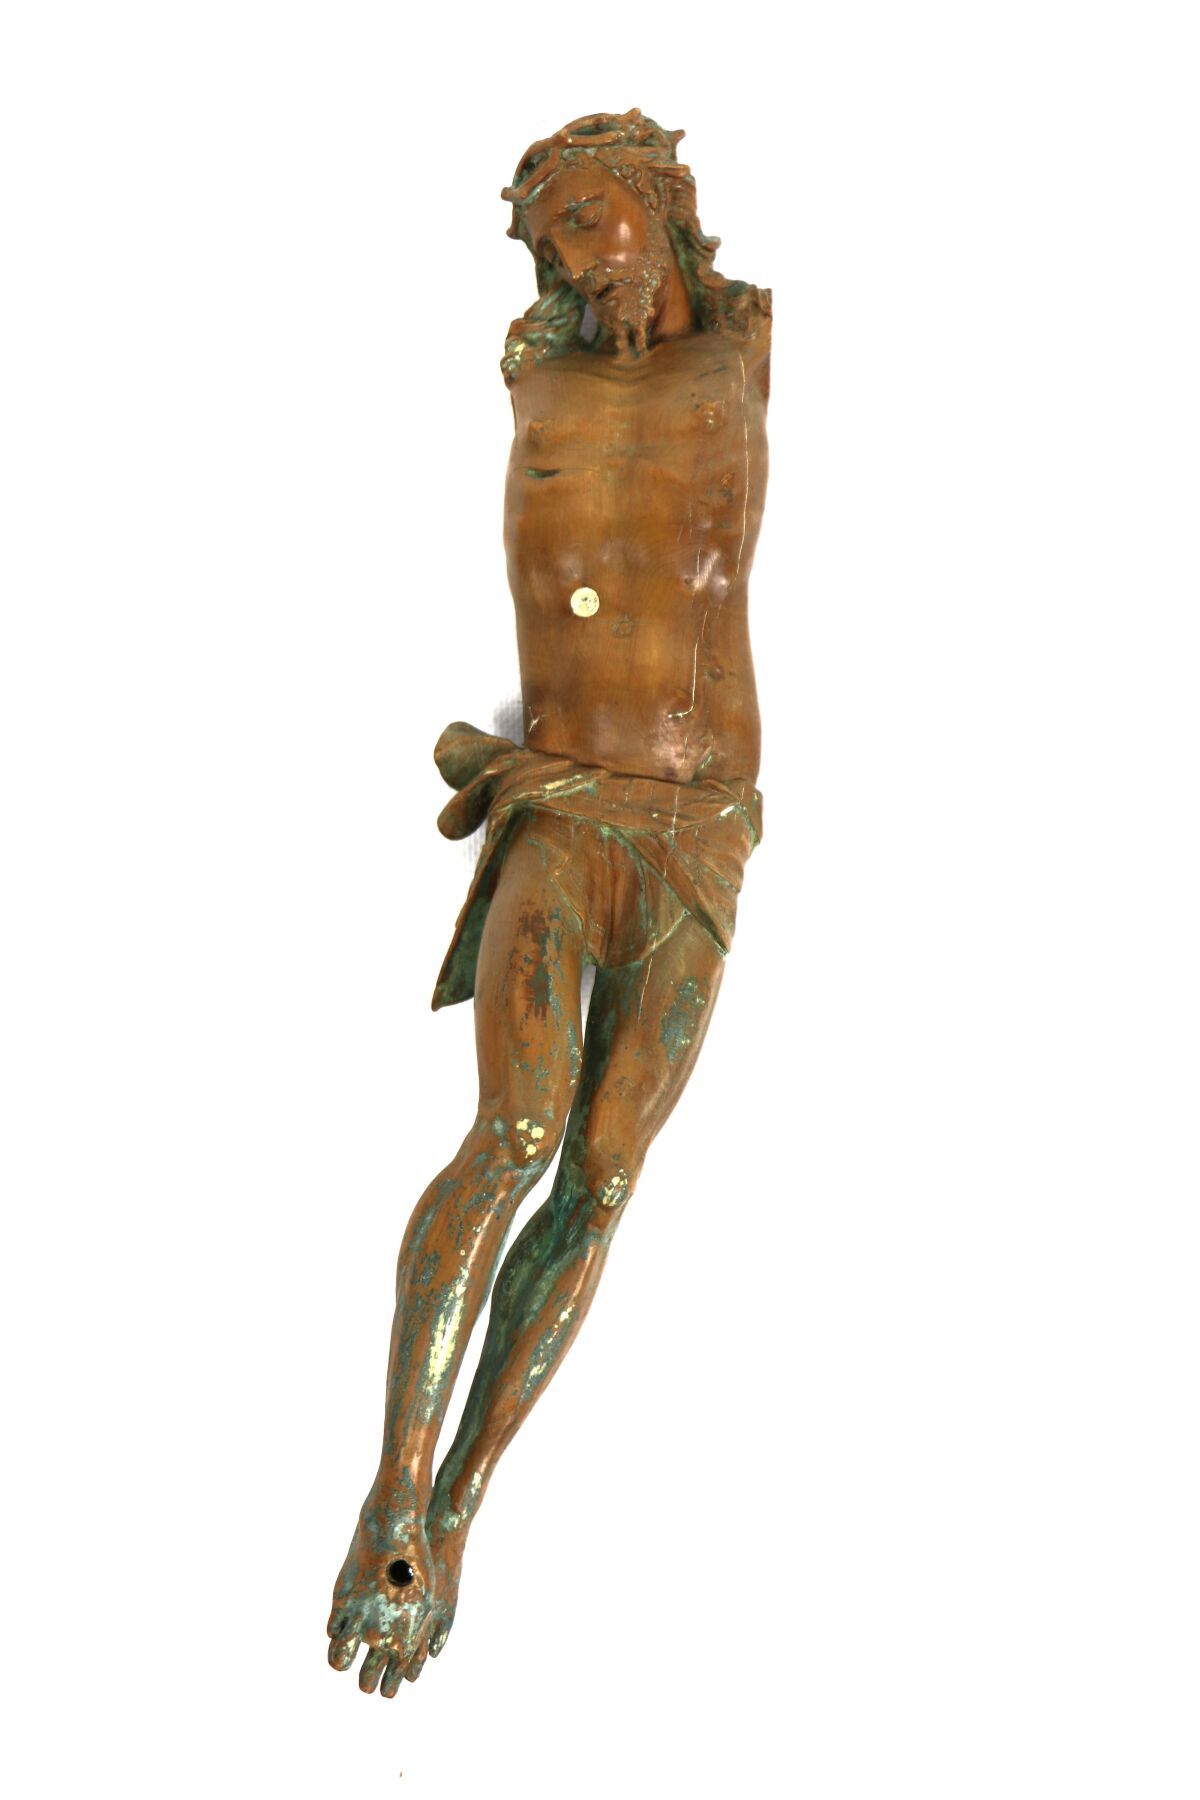 Null Cristo en madera blanda tallada.
Arte popular del siglo XVII.
H_34,5 cm, fa&hellip;